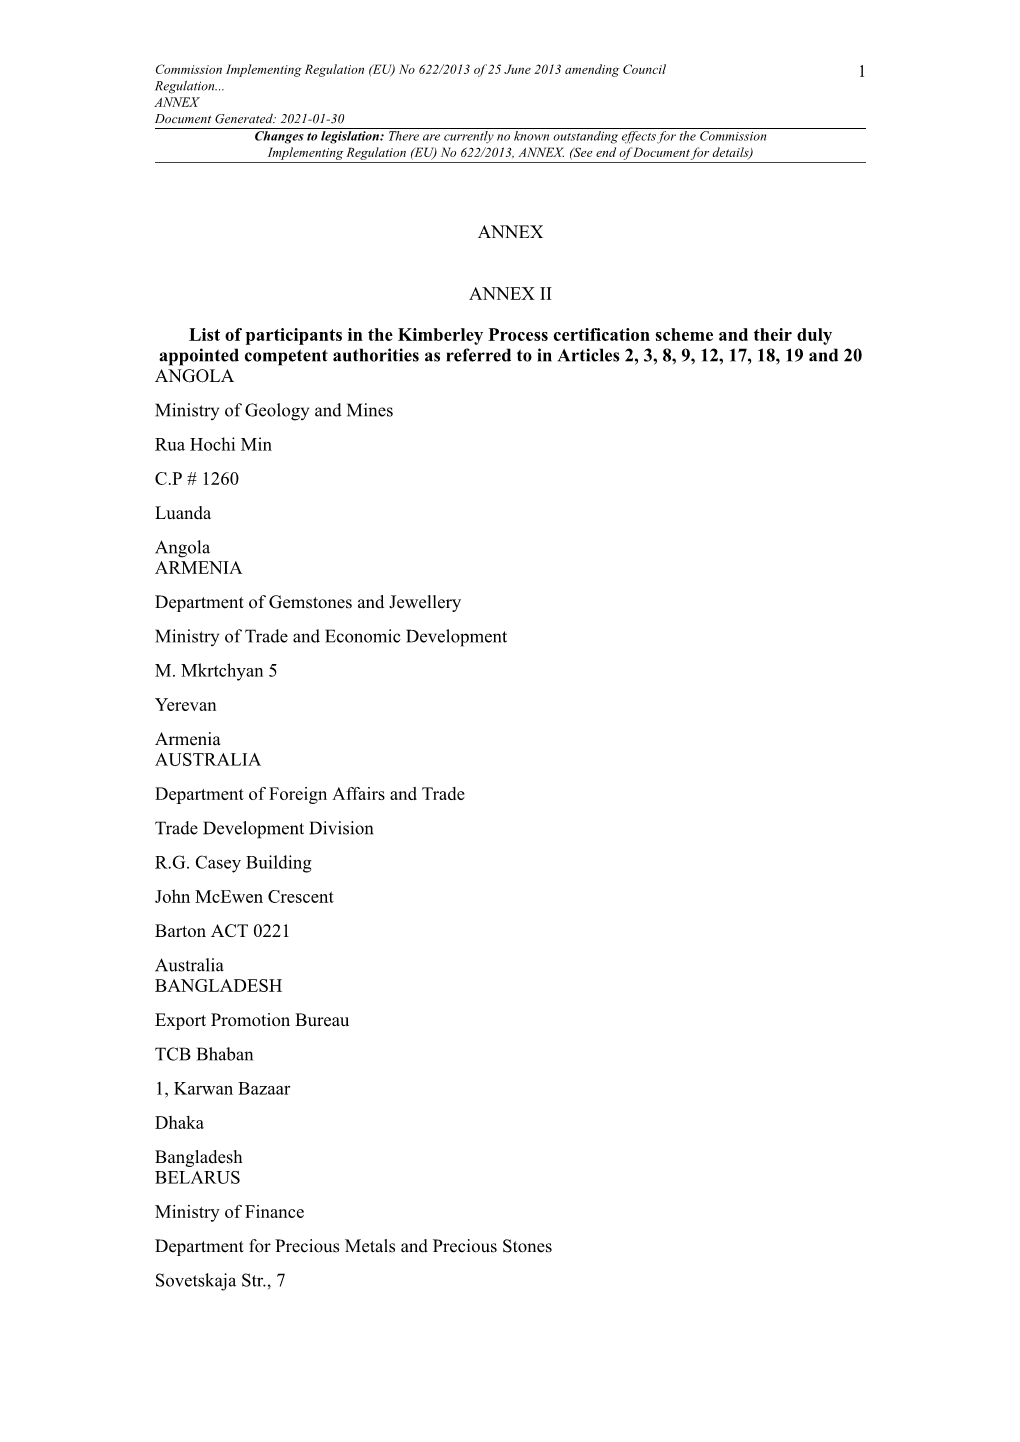 Commission Implementing Regulation (EU) No 622/2013 of 25 June 2013 Amending Council 1 Regulation